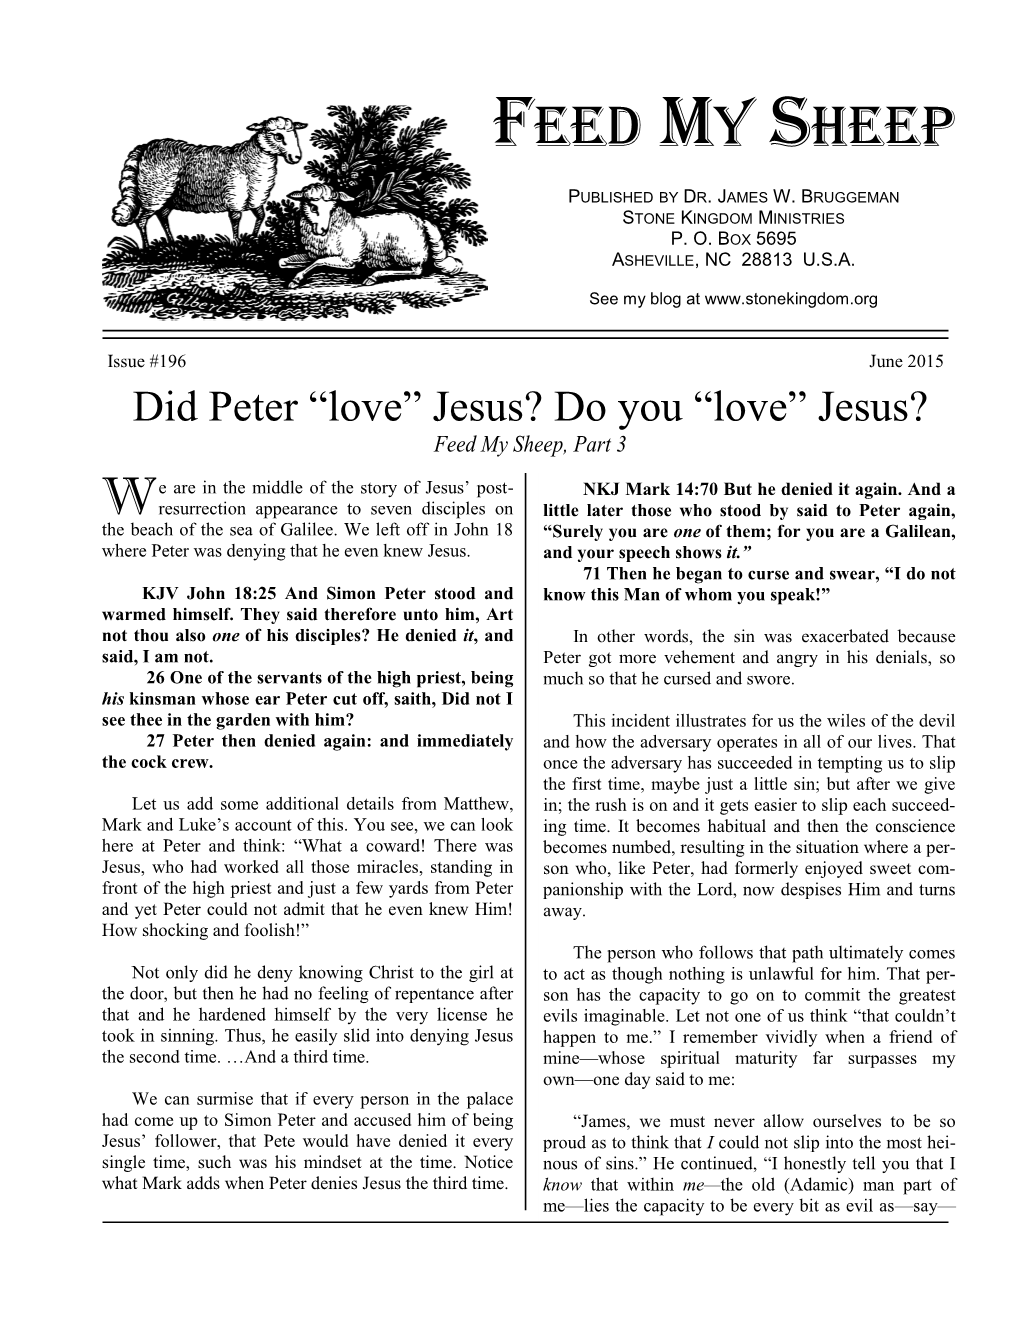 Jesus? Do You “Love” Jesus? Feed My Sheep, Part 3